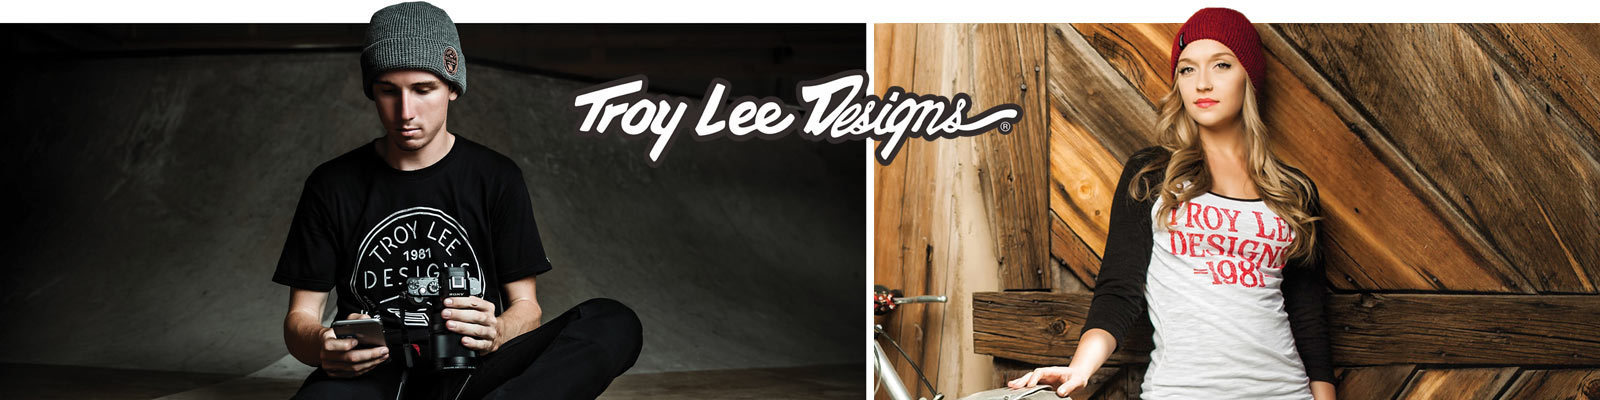 Troy-Lee-Designs-Shorts